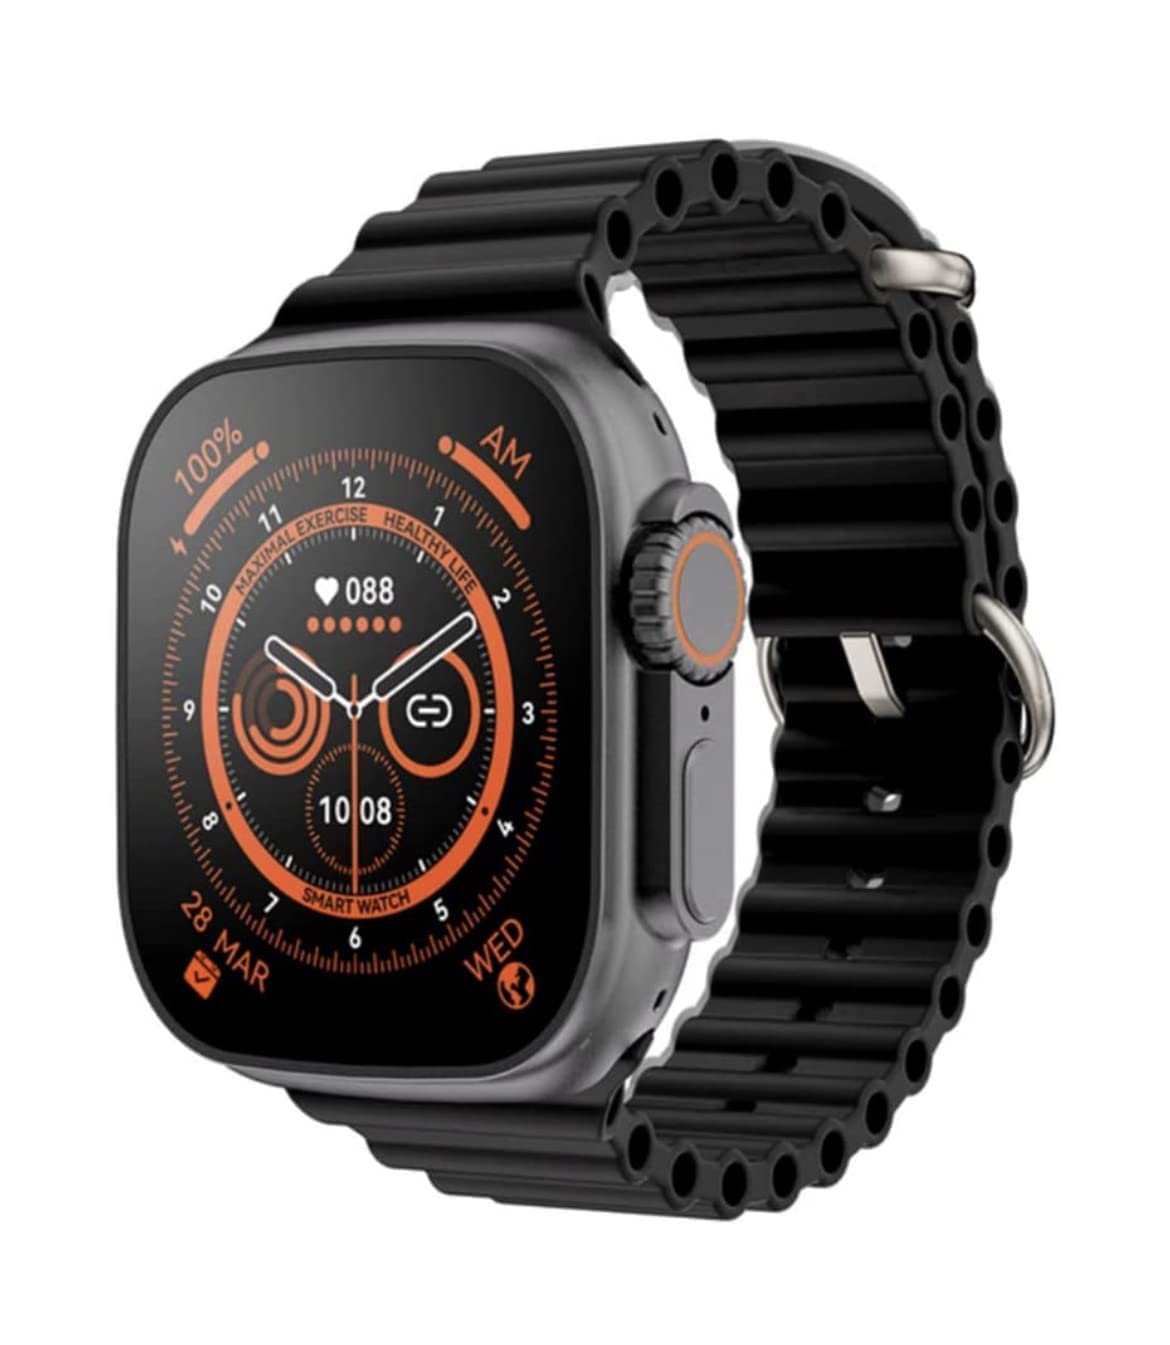 New T800 Ultra Watch Smartwatch 1.9 HD Display Bluetooth Calling SmartWatch  - Black